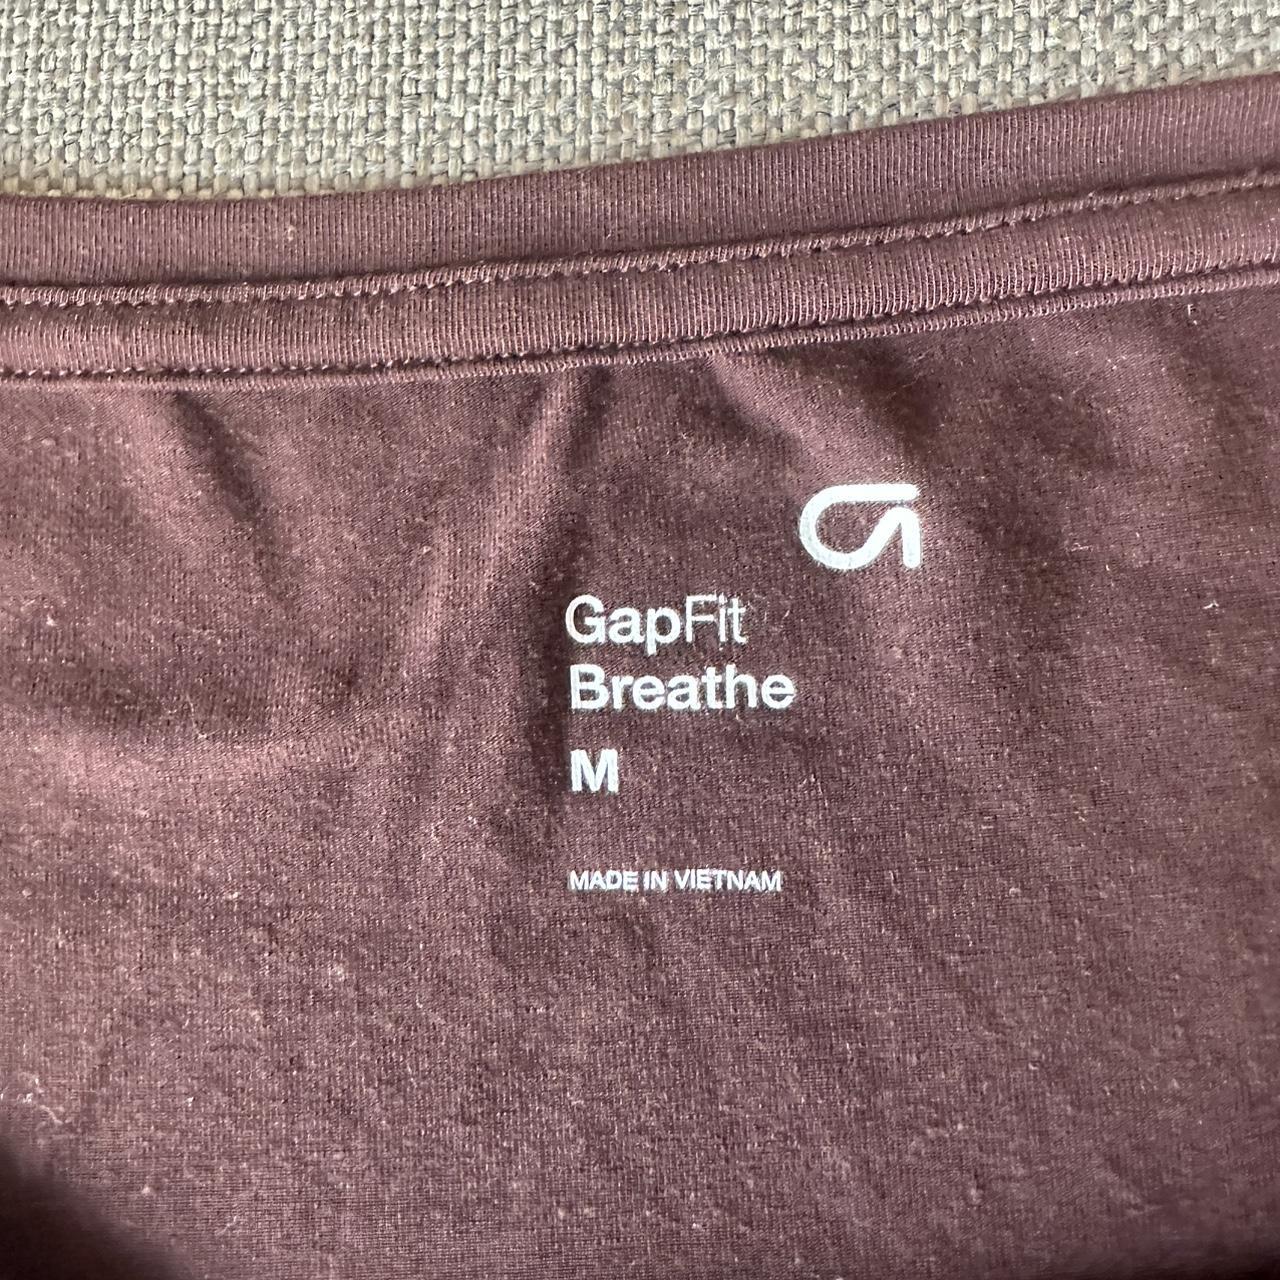 Gap GapFit Breathe short sleeve workout top. Super - Depop